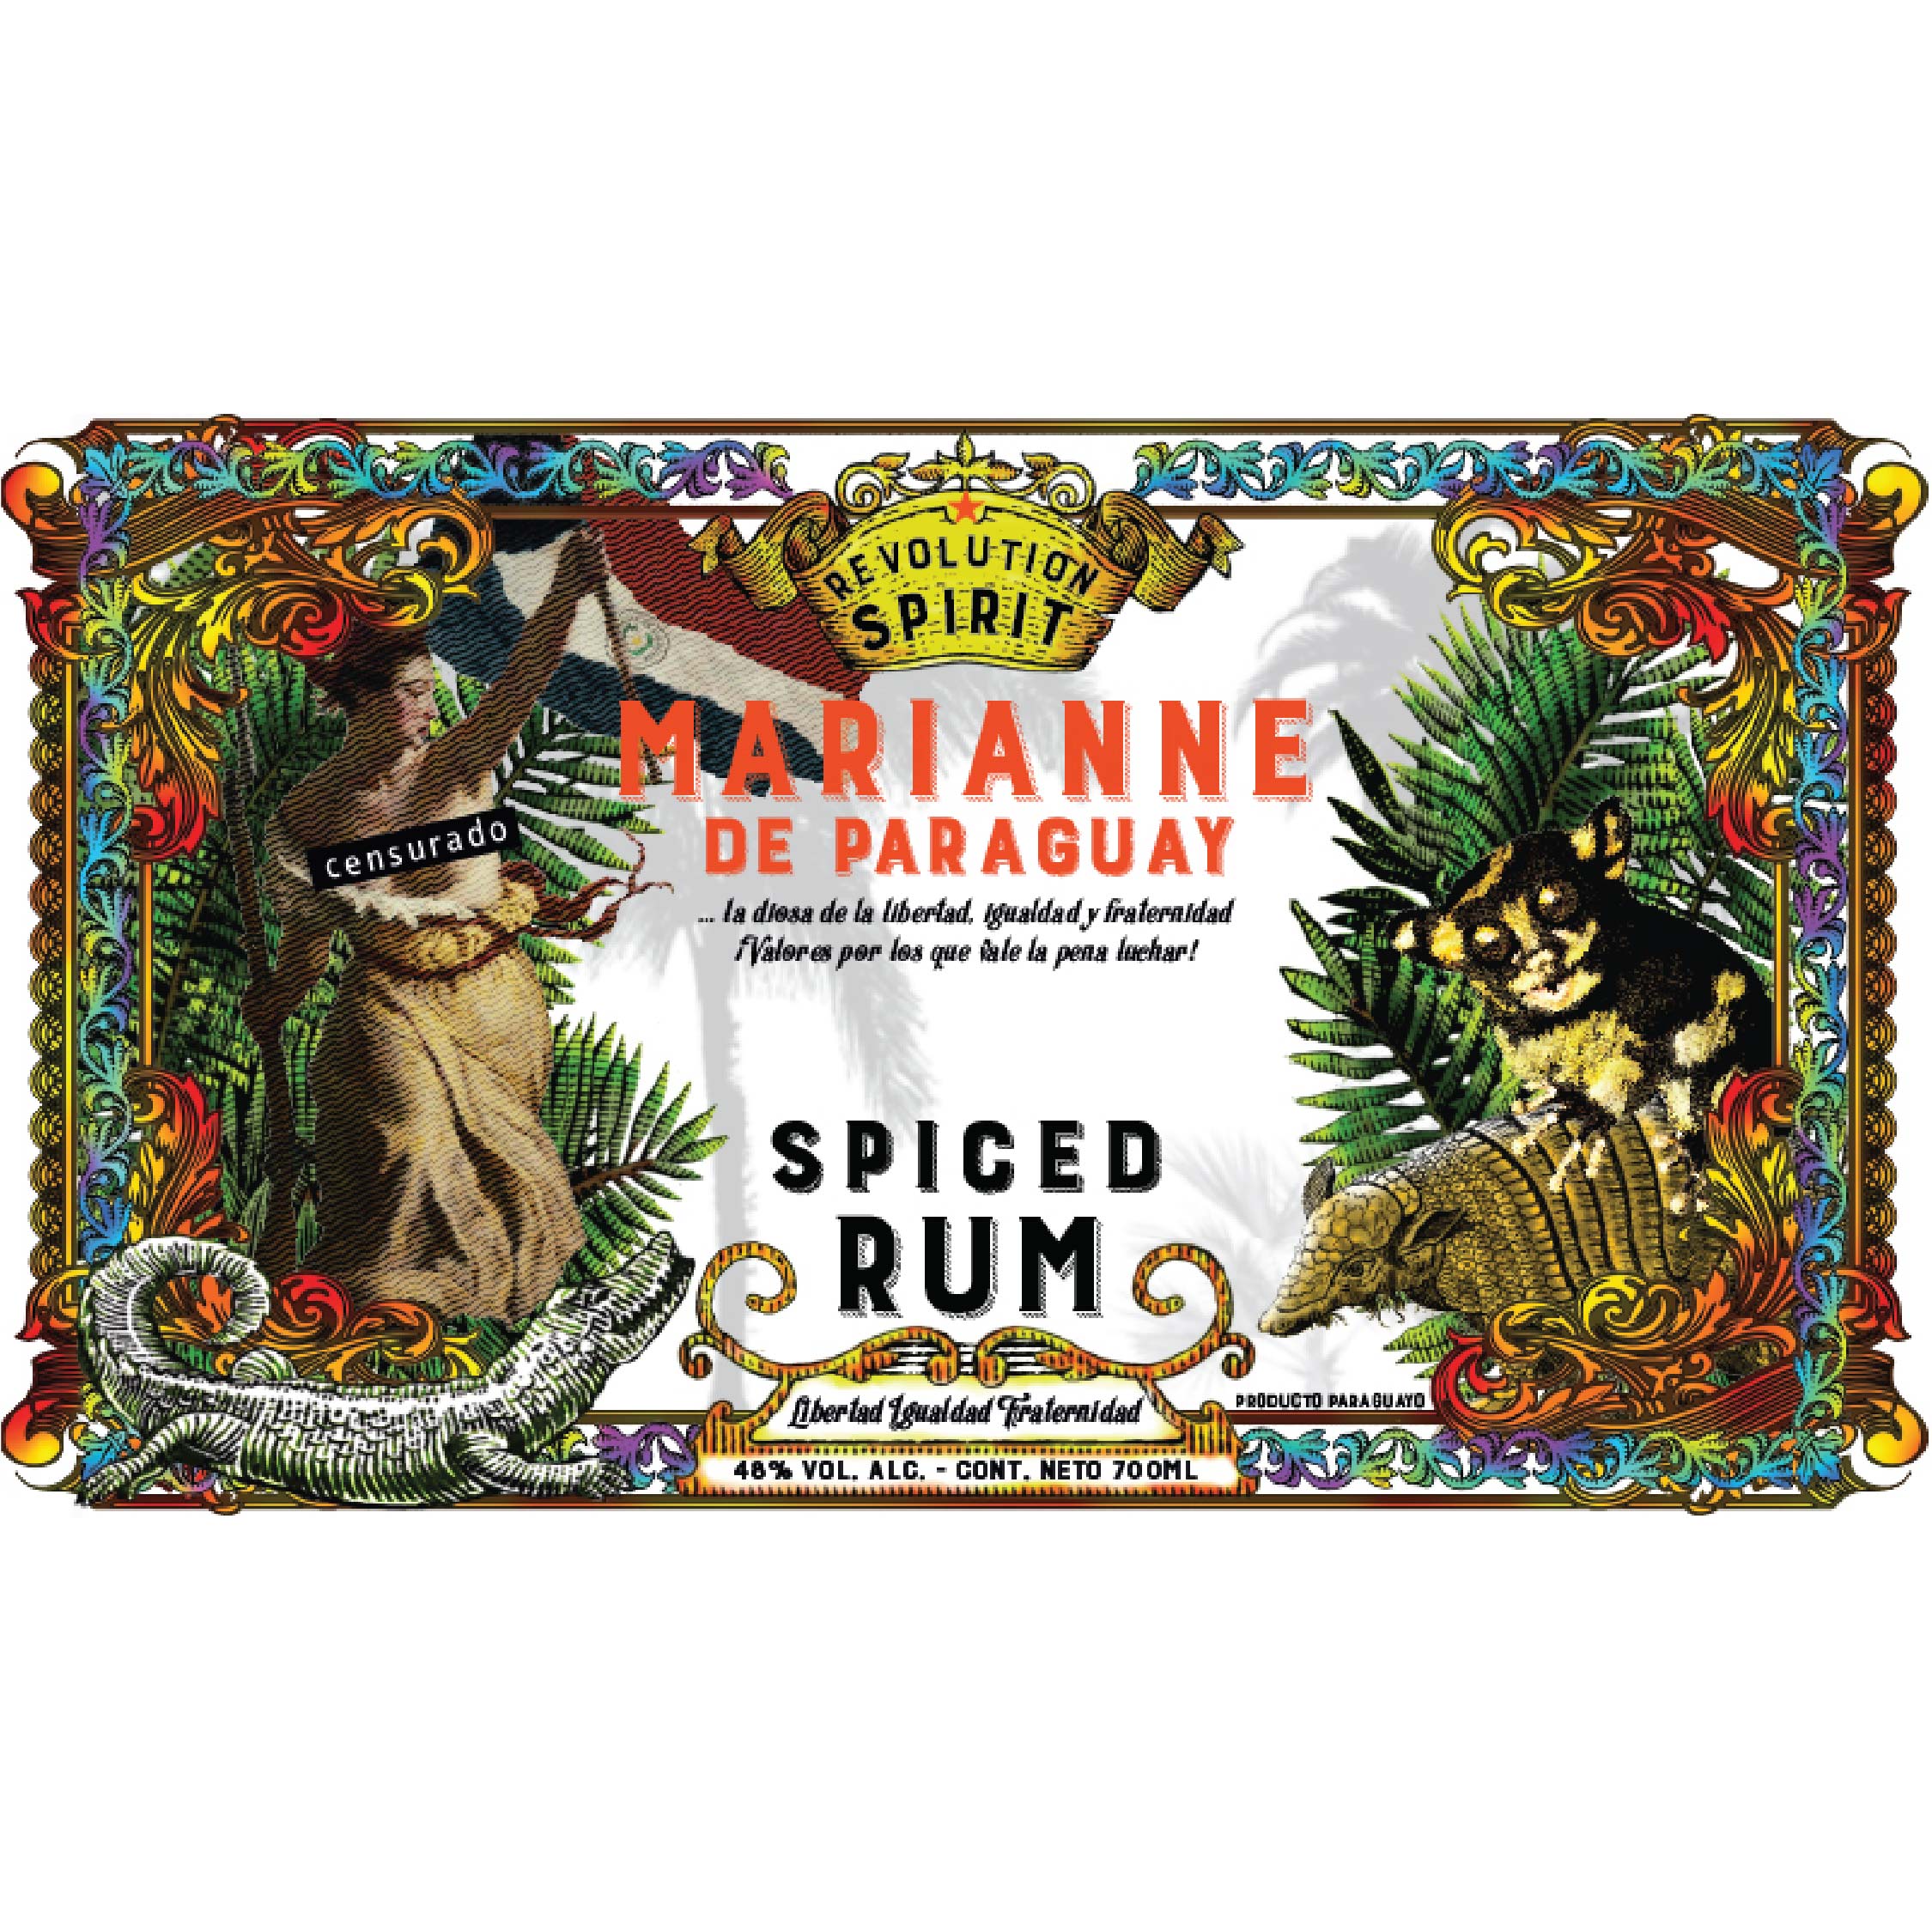 Marianne de Páraguay spiced rum